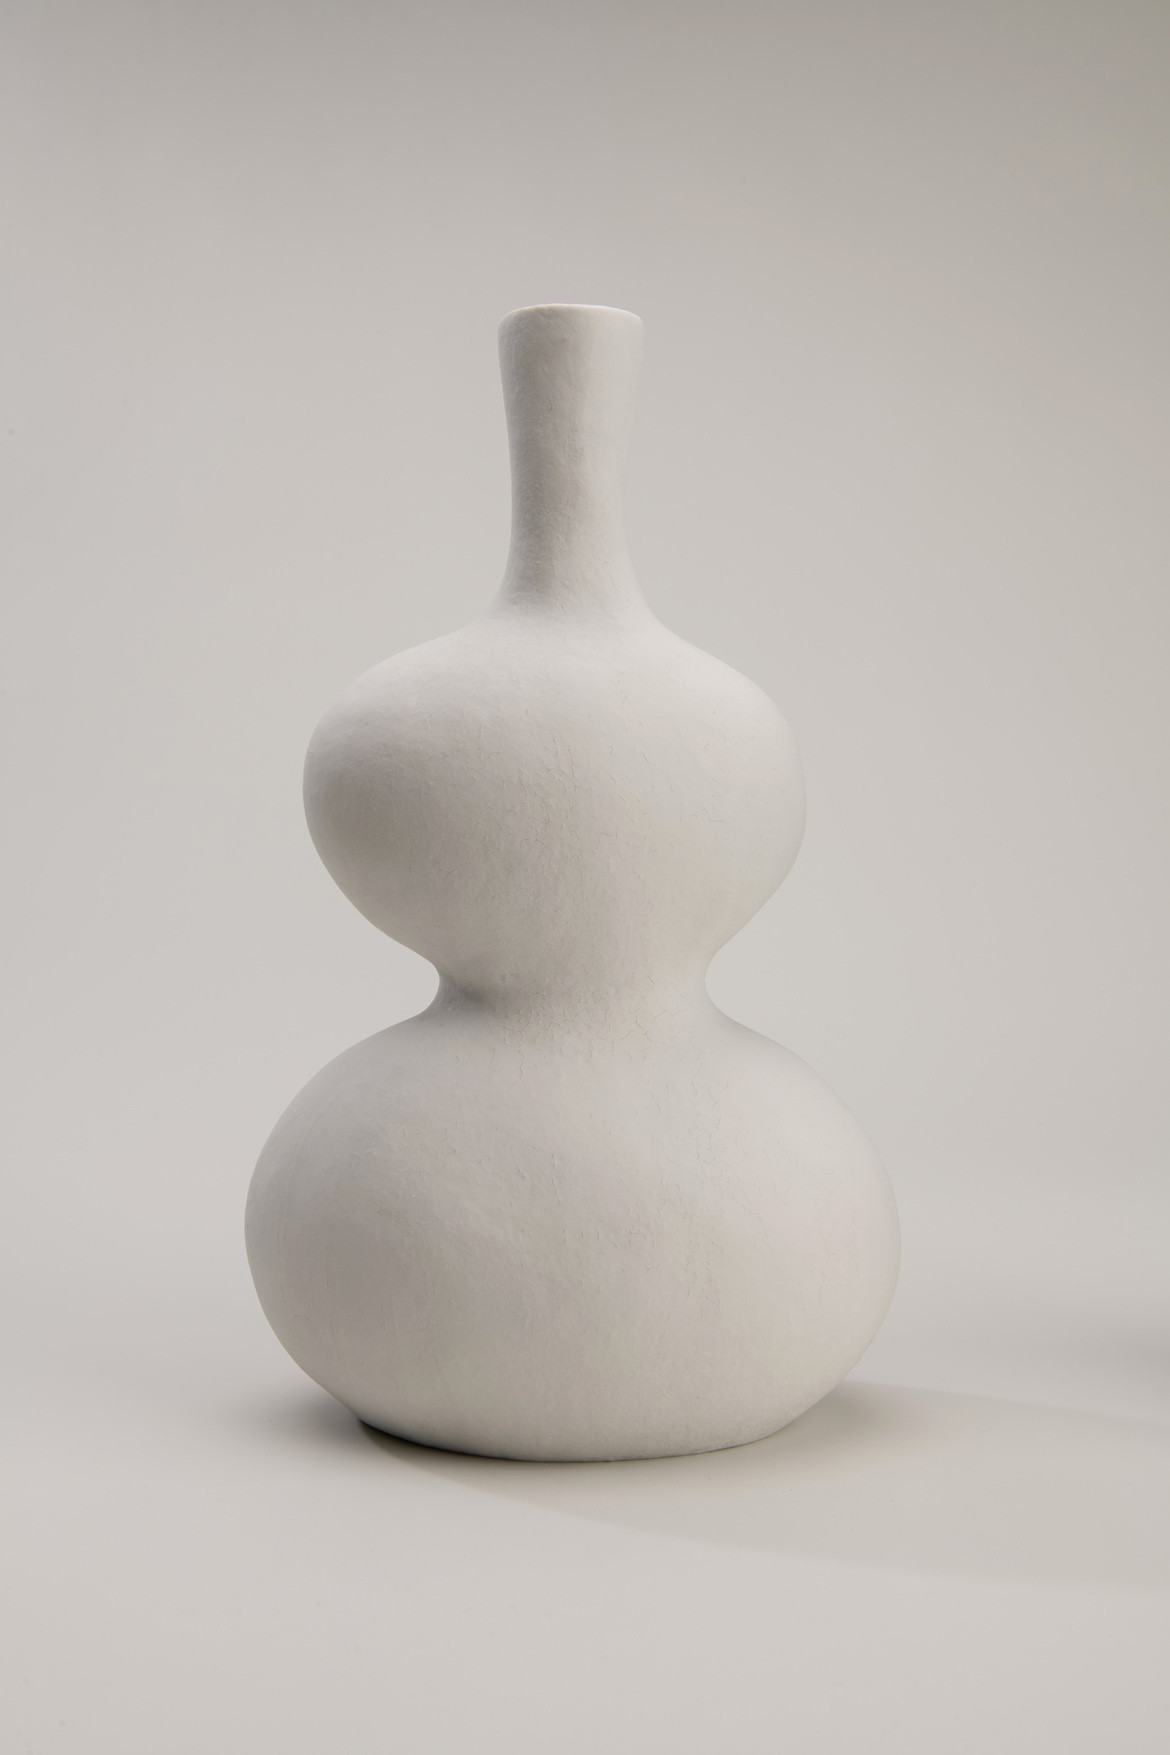 Eloise White's white ceramic vessel on a white background.